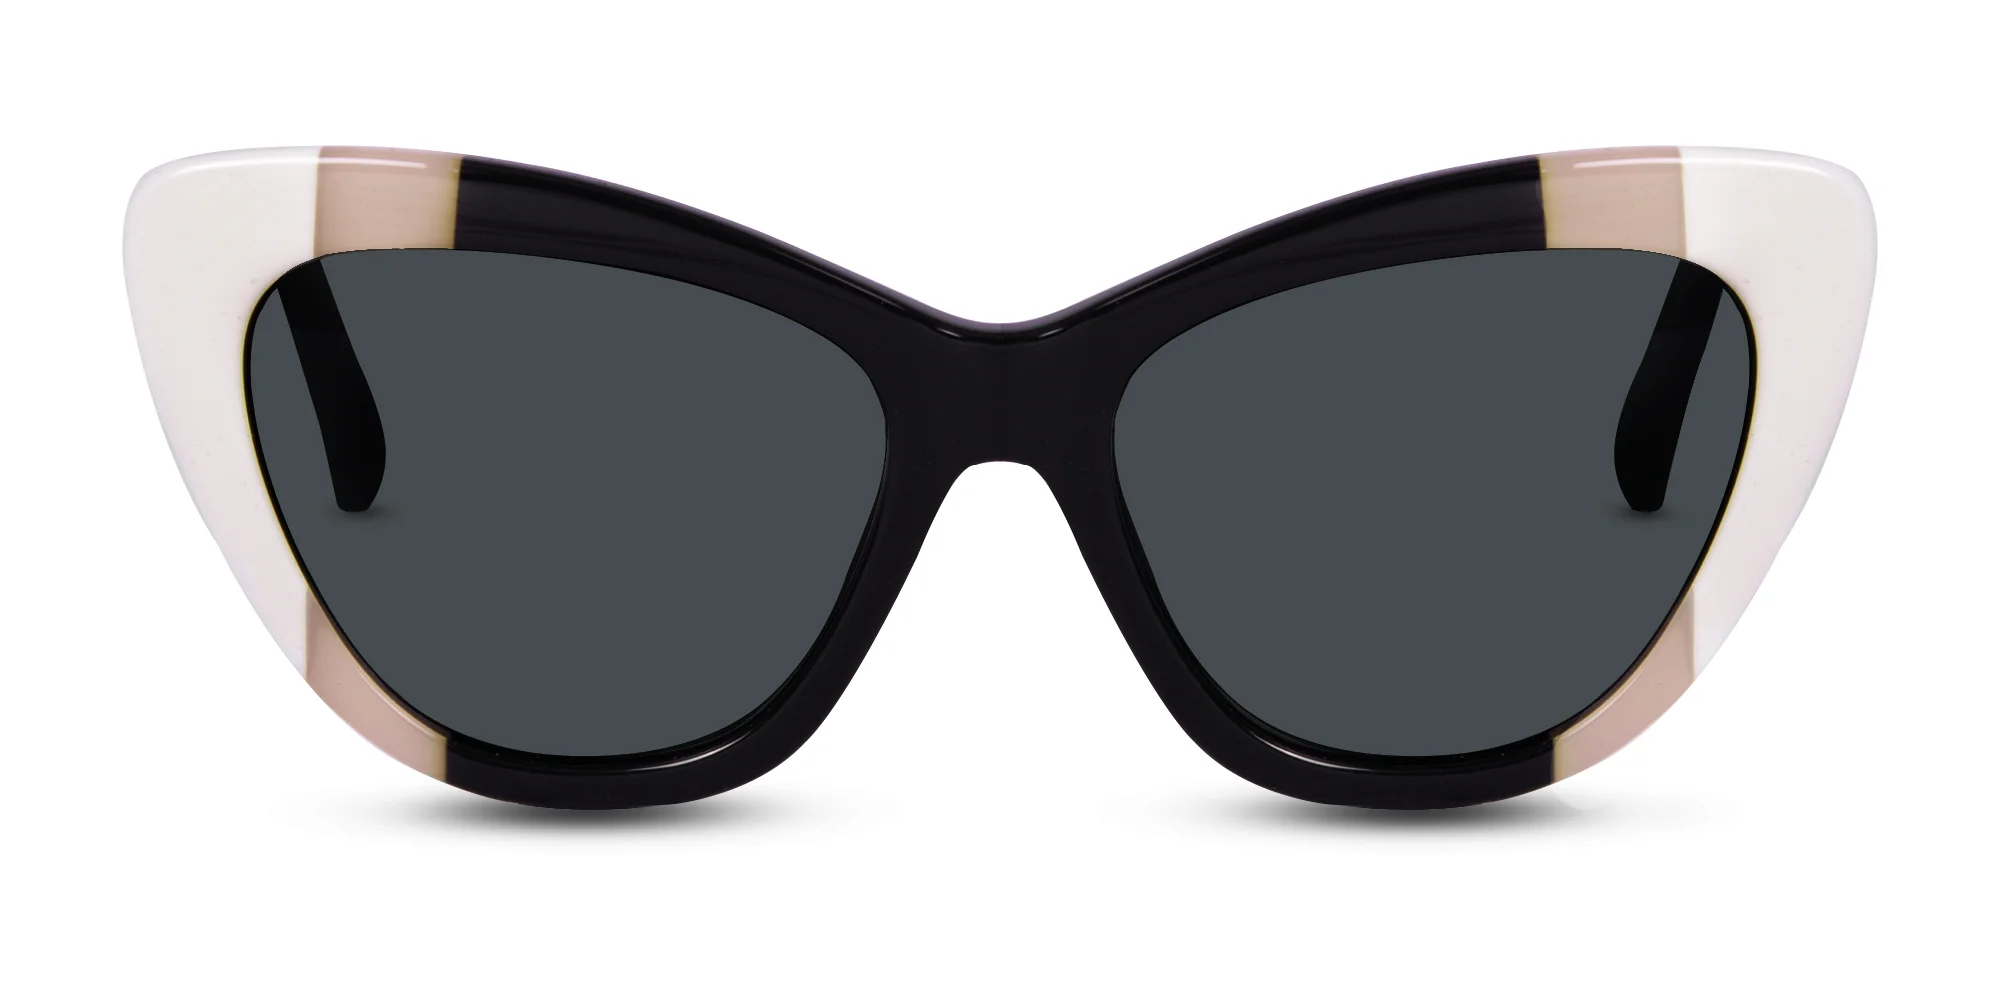 Black And White Sunglasses